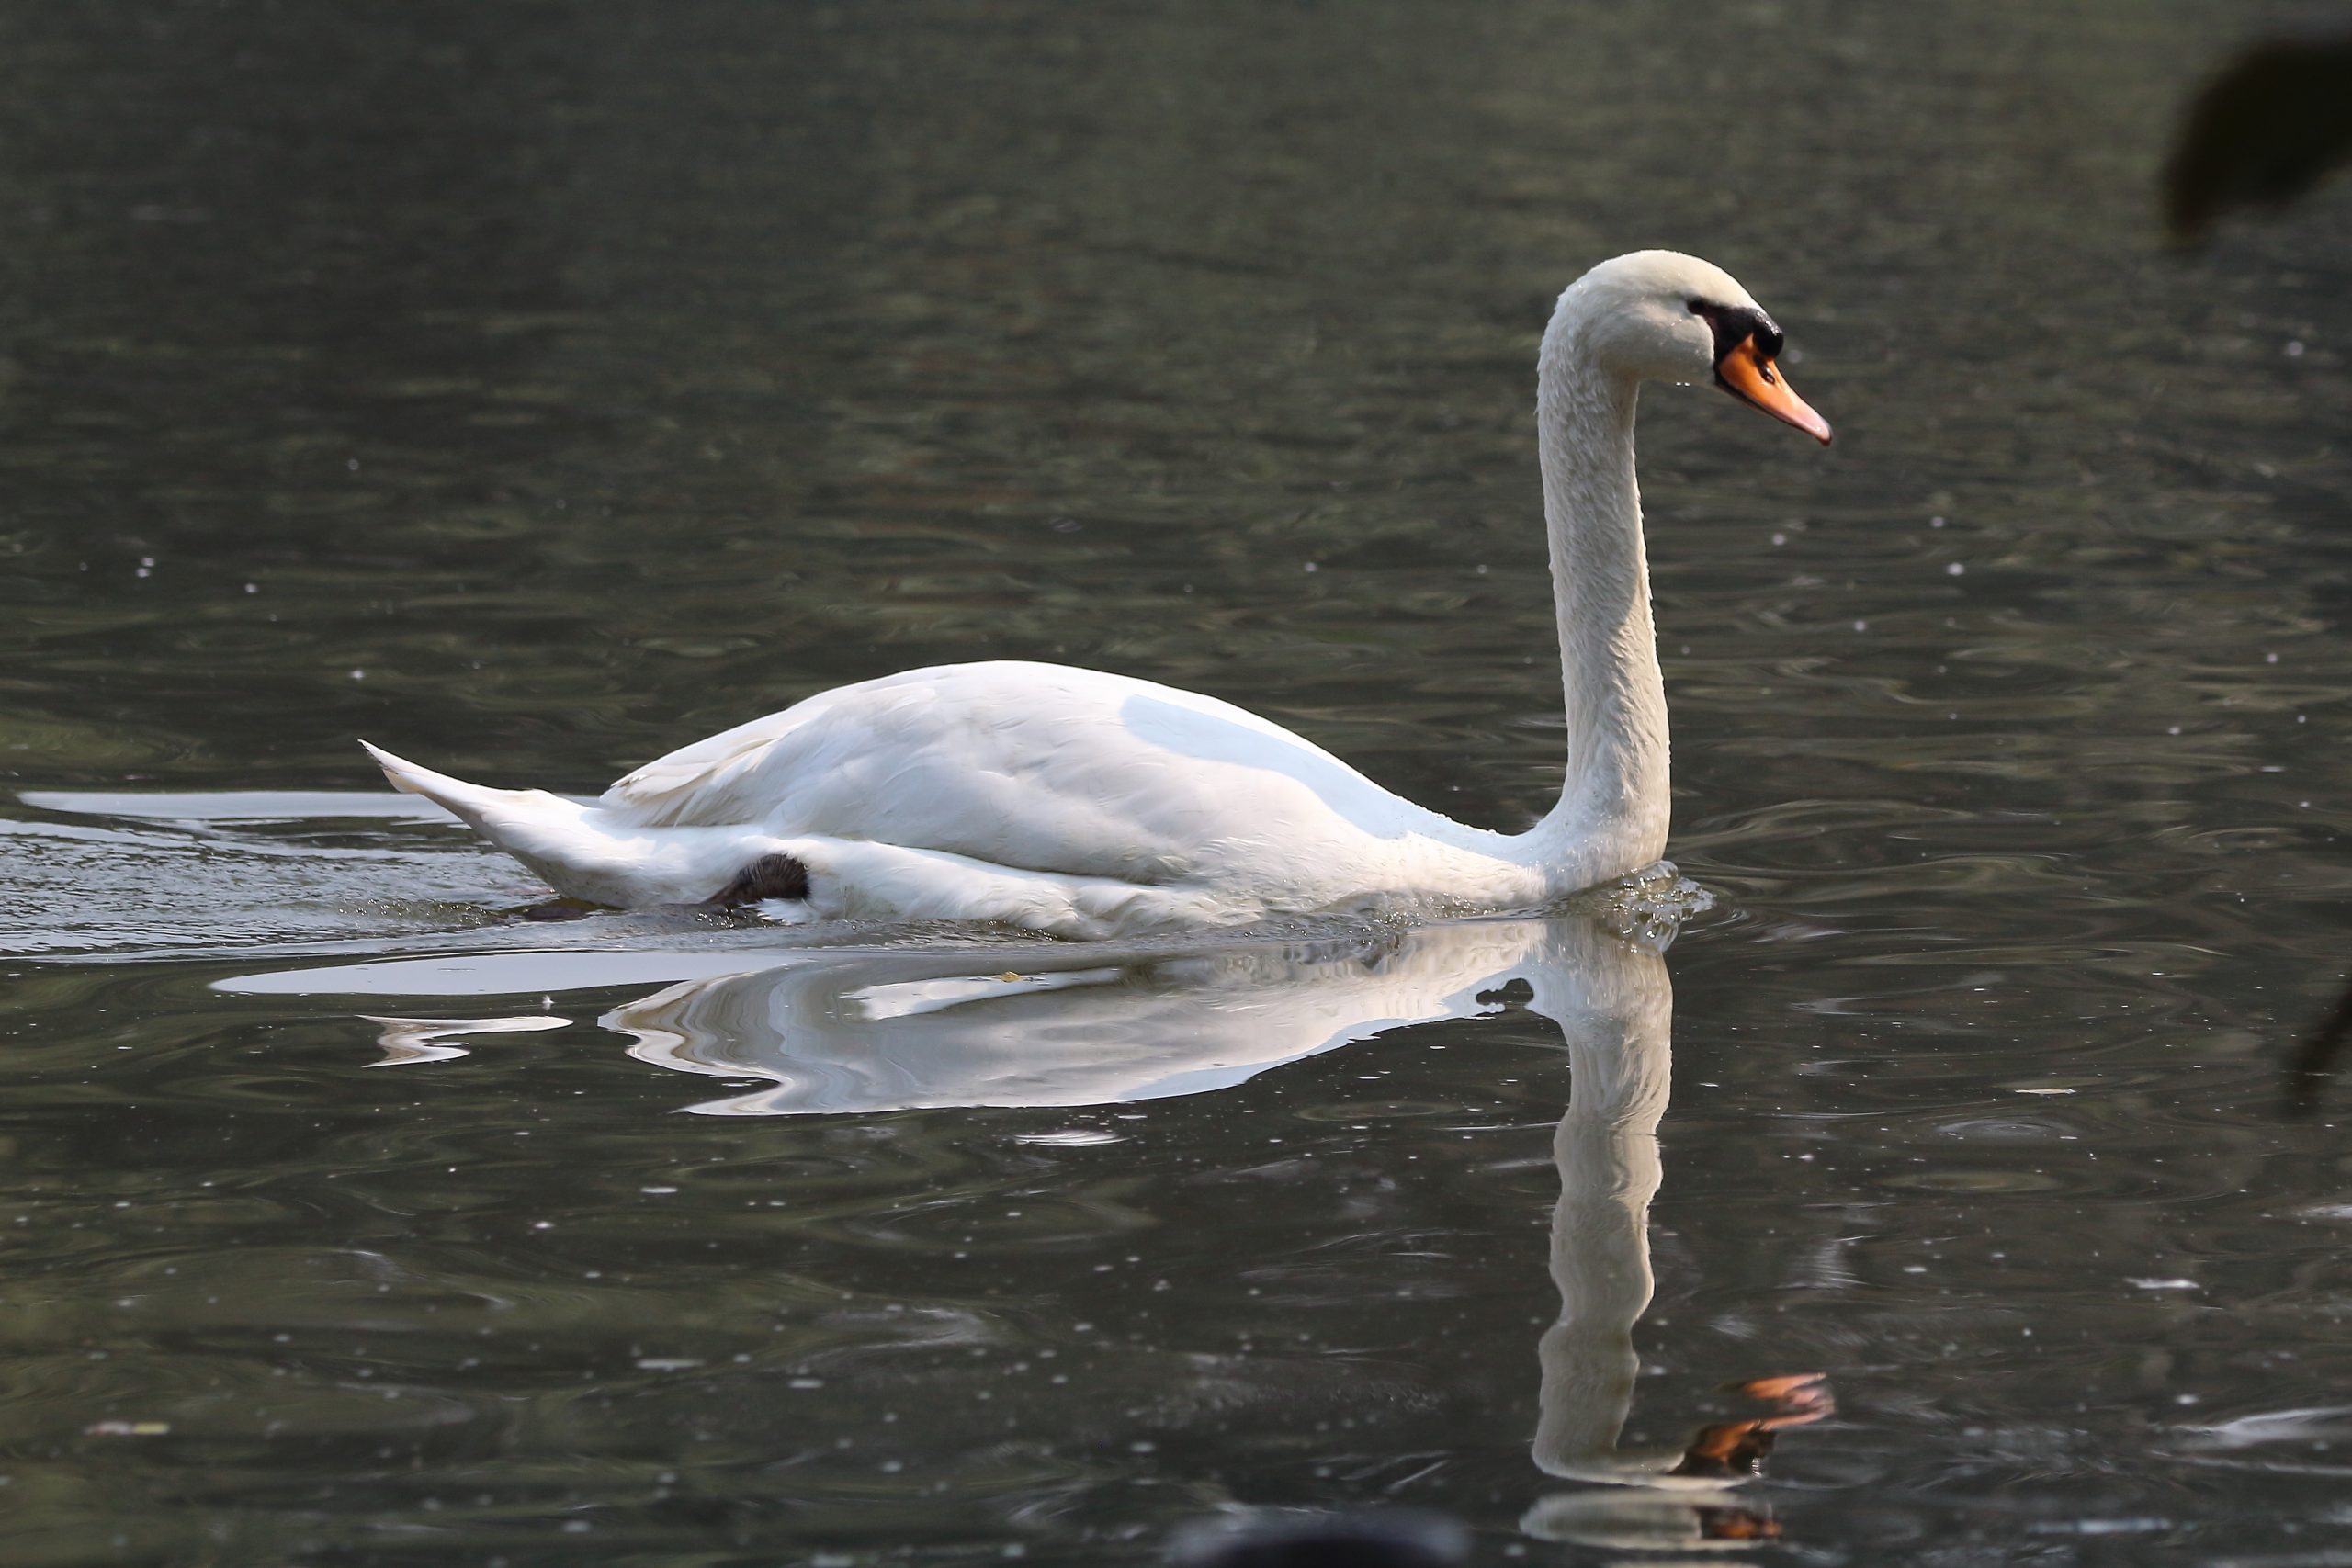 Australian swan swimming peacefully in a lake.